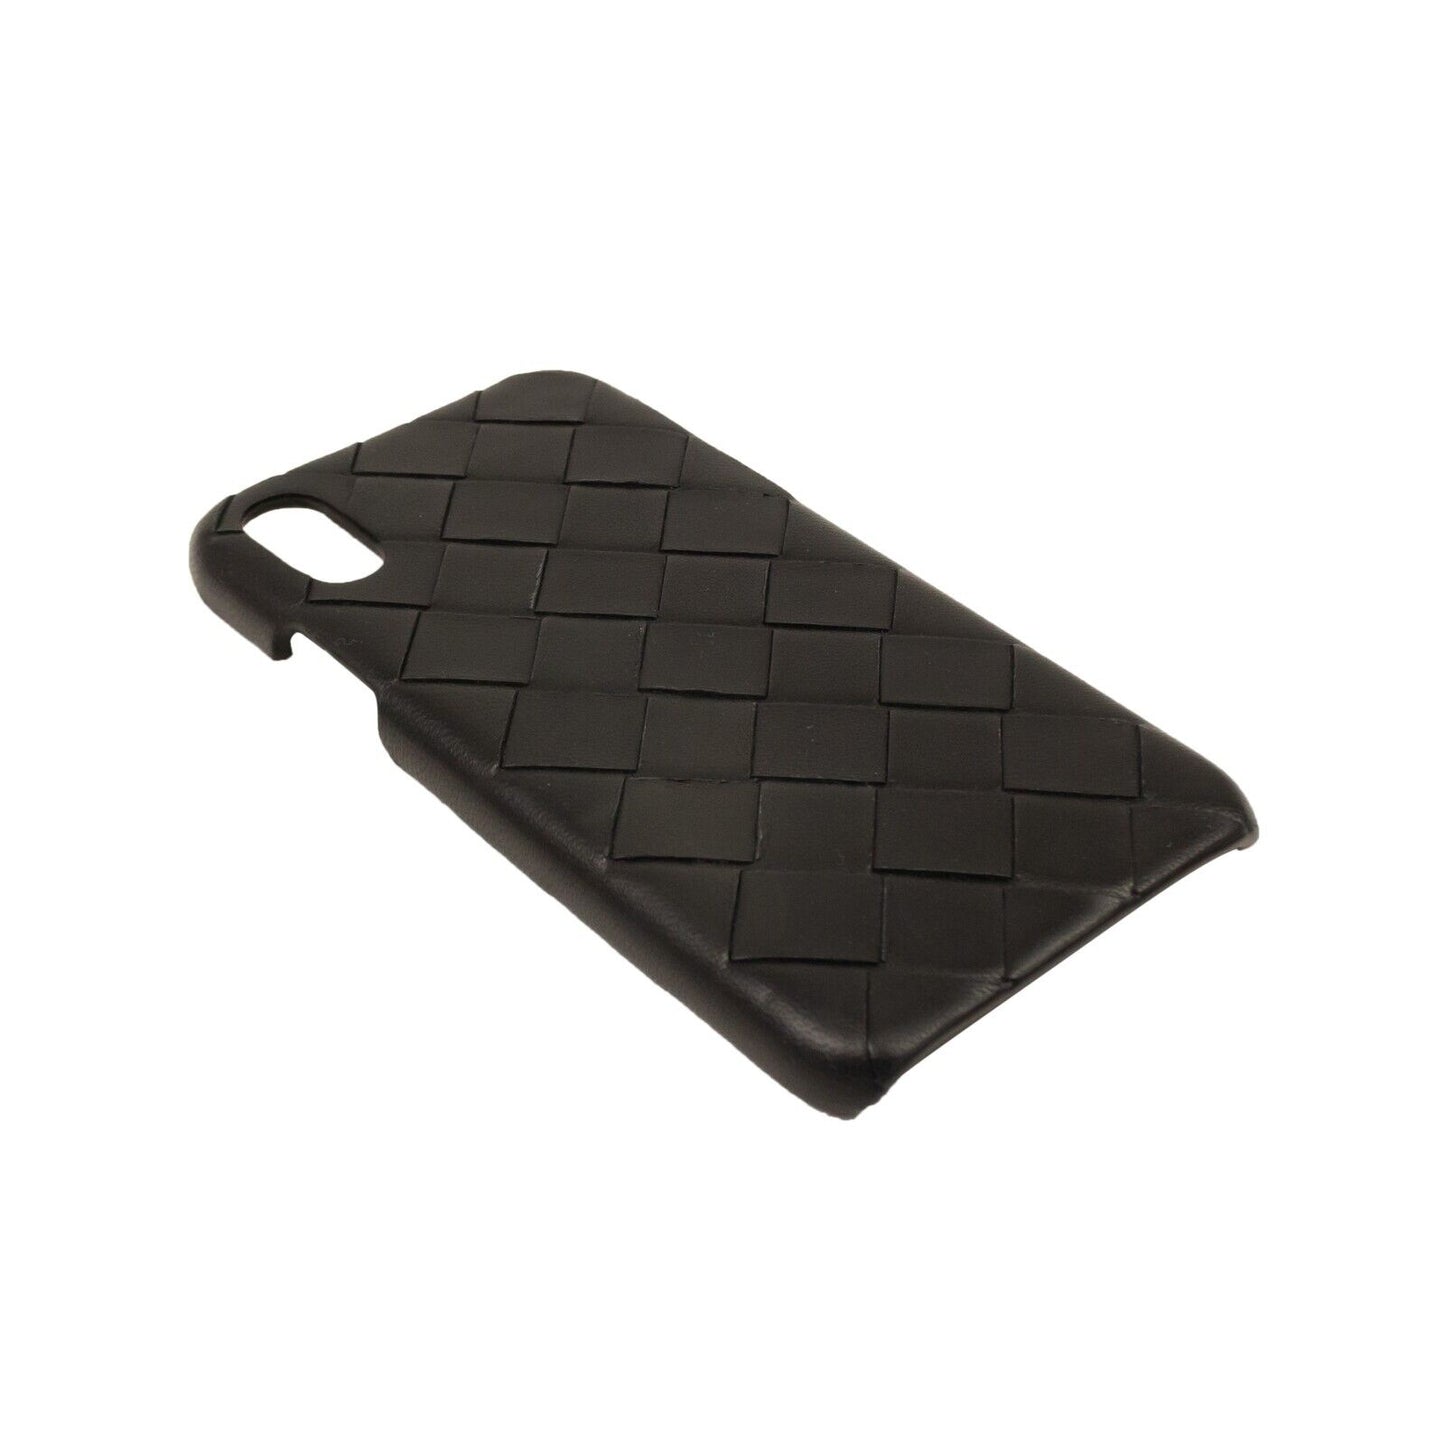 Bottega Veneta Leather Iphone Xs Phone Case - Black